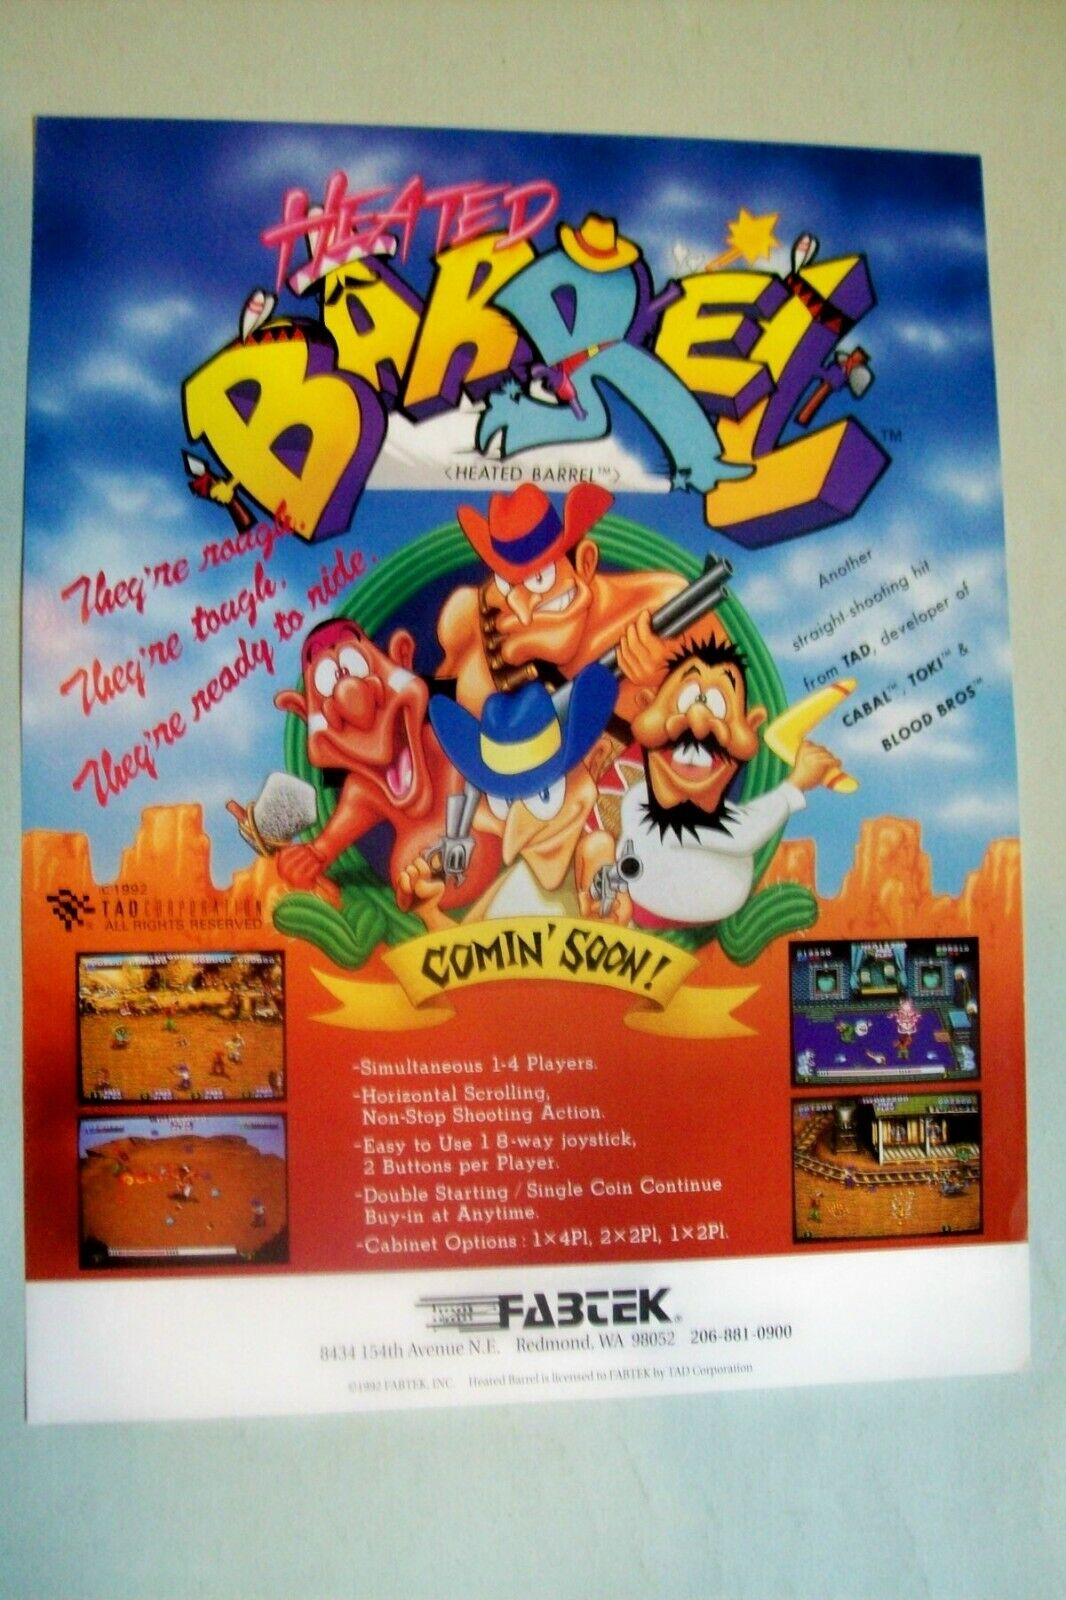 Vintage/original Fabtek Heated Barrel Arcade Video Game Sales Flyer - Mint Cond.